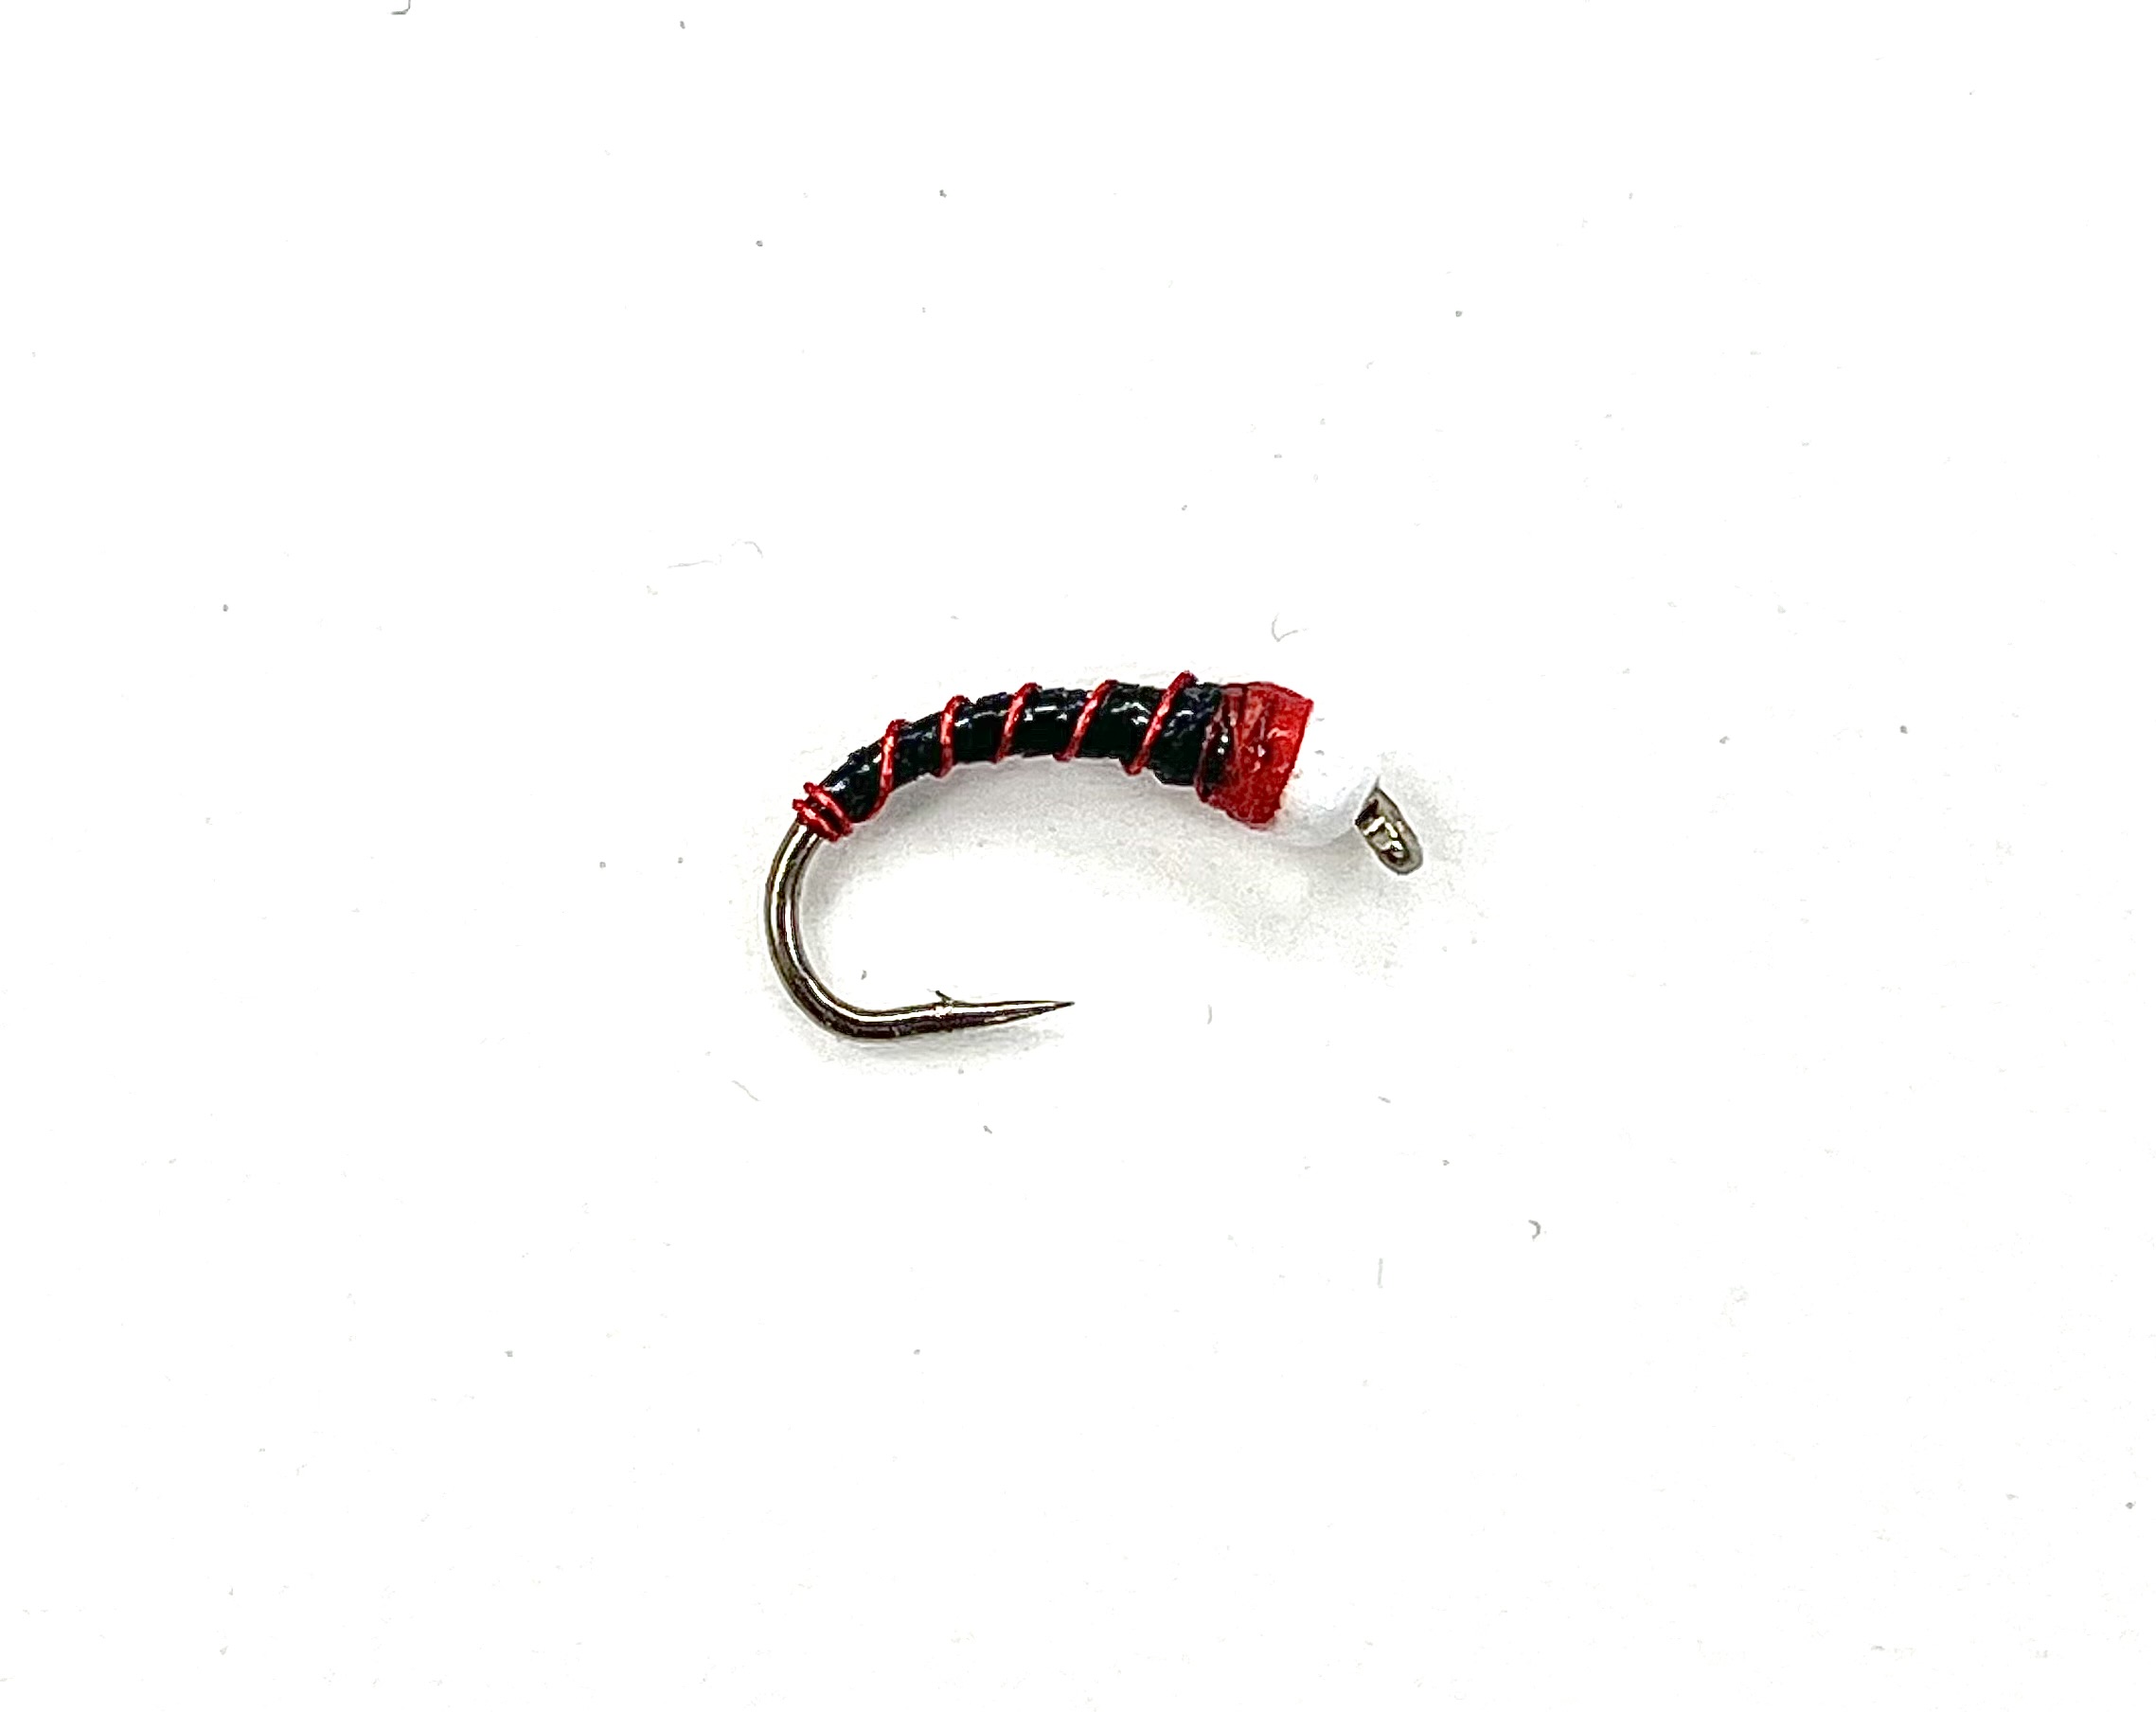 FAD BC Chironomid Pupa (White Bead) - Black/Red - Size 14